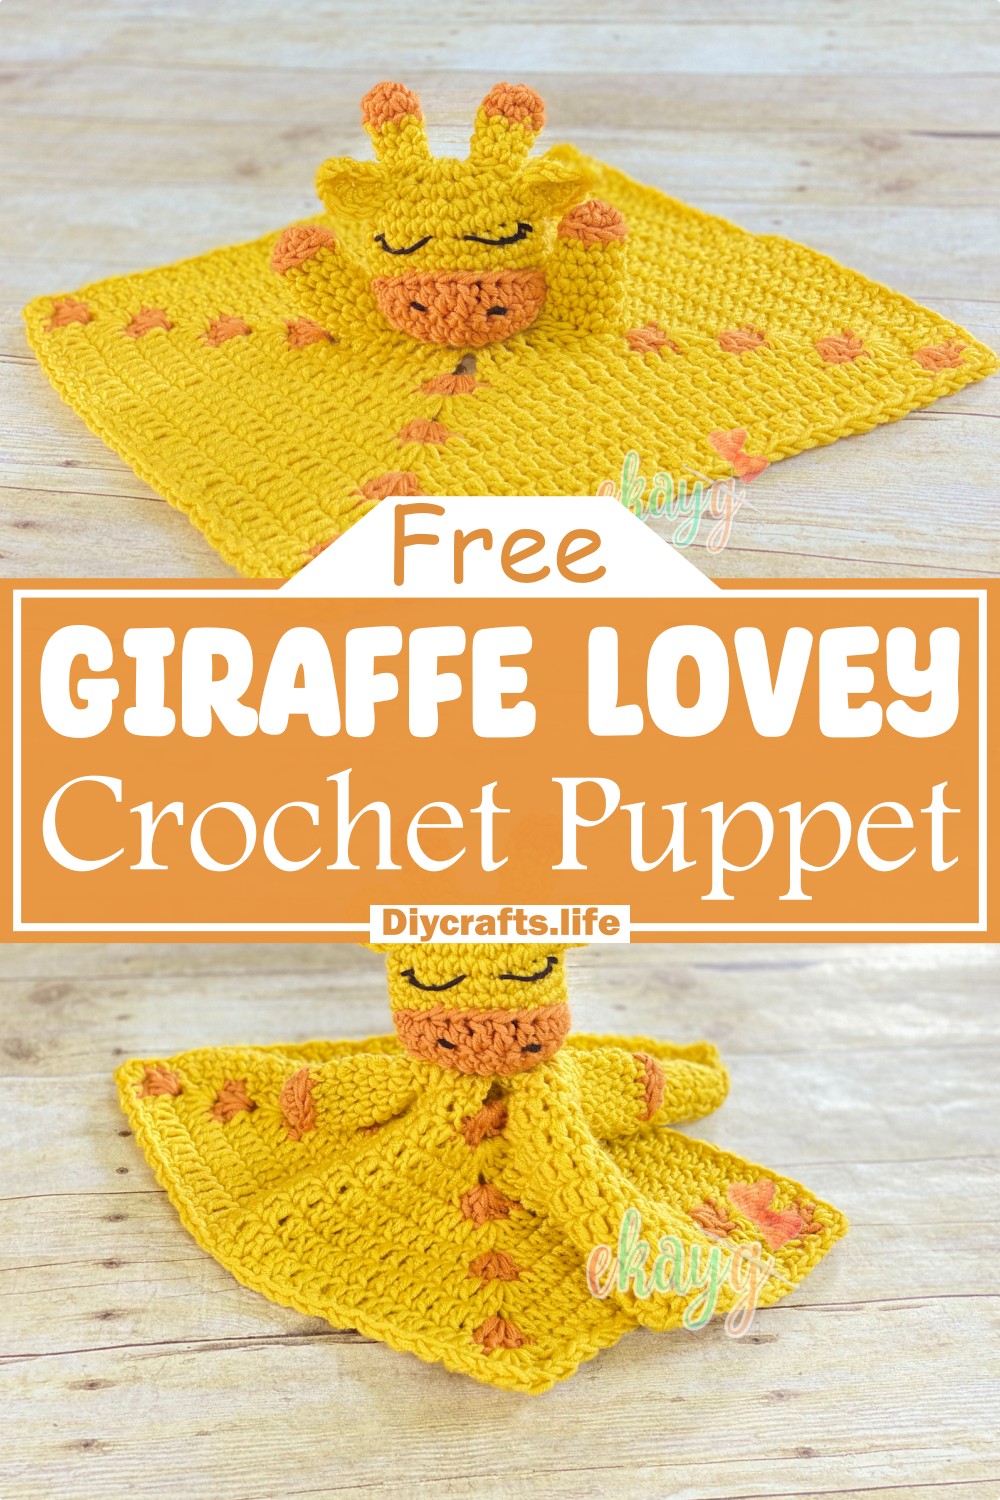 Crochet Giraffe Lovey Puppet Pattern